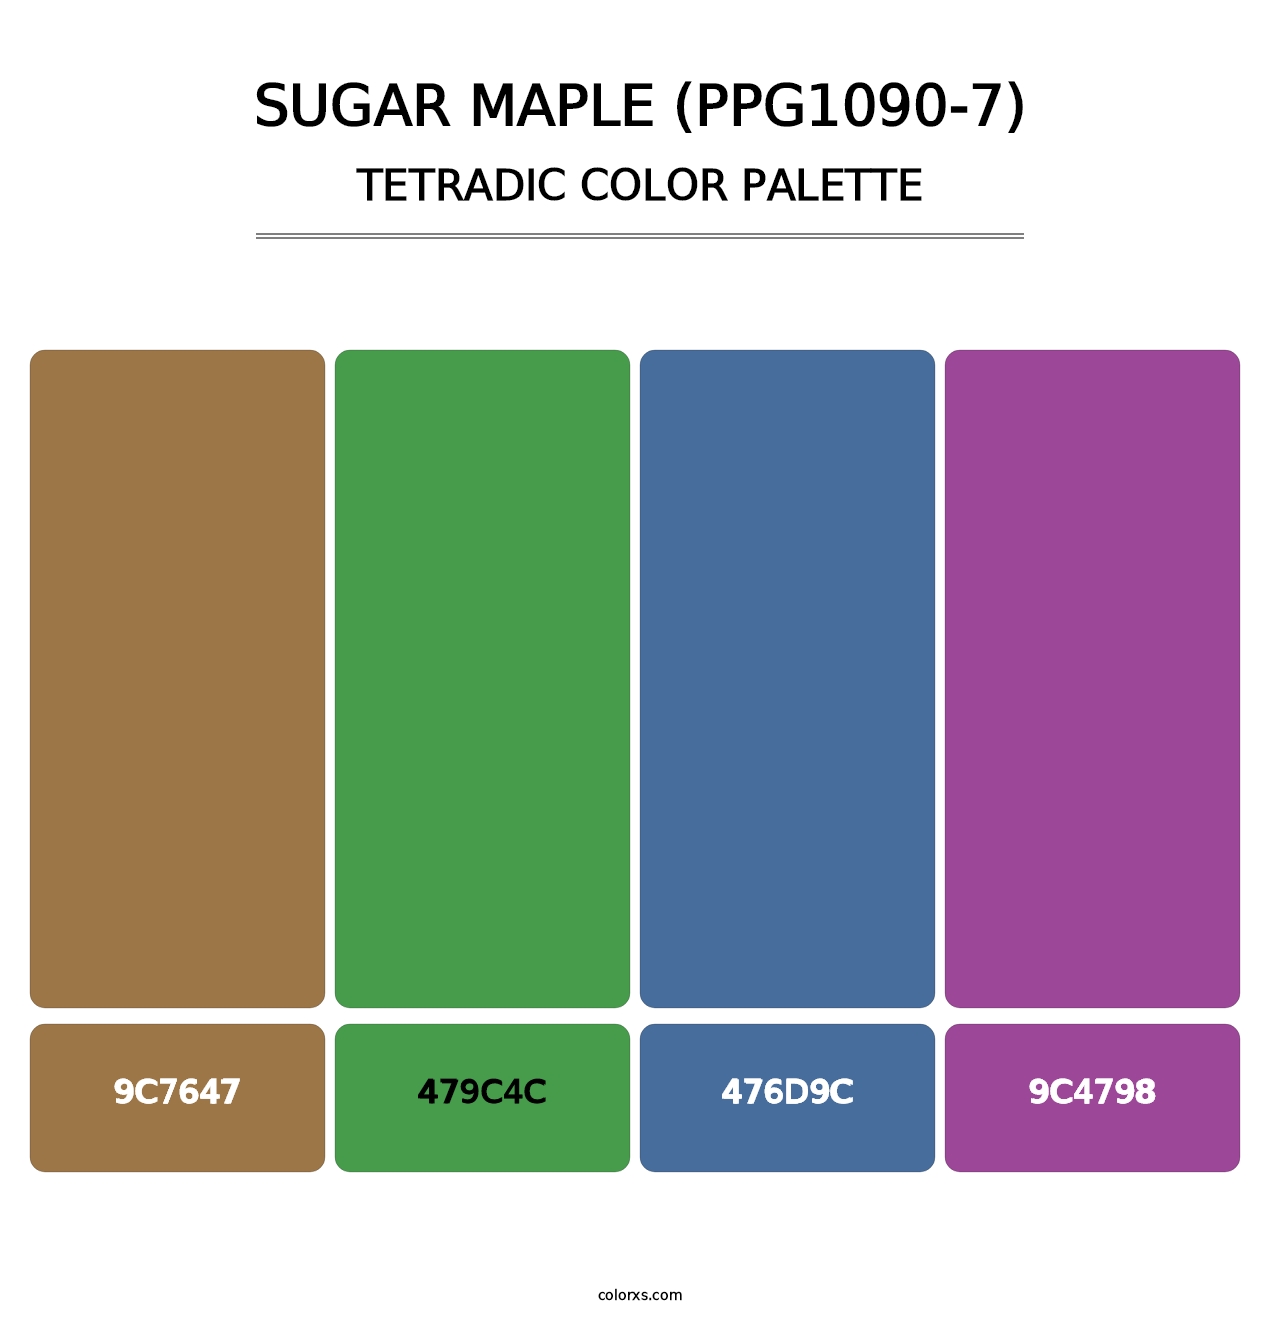 Sugar Maple (PPG1090-7) - Tetradic Color Palette